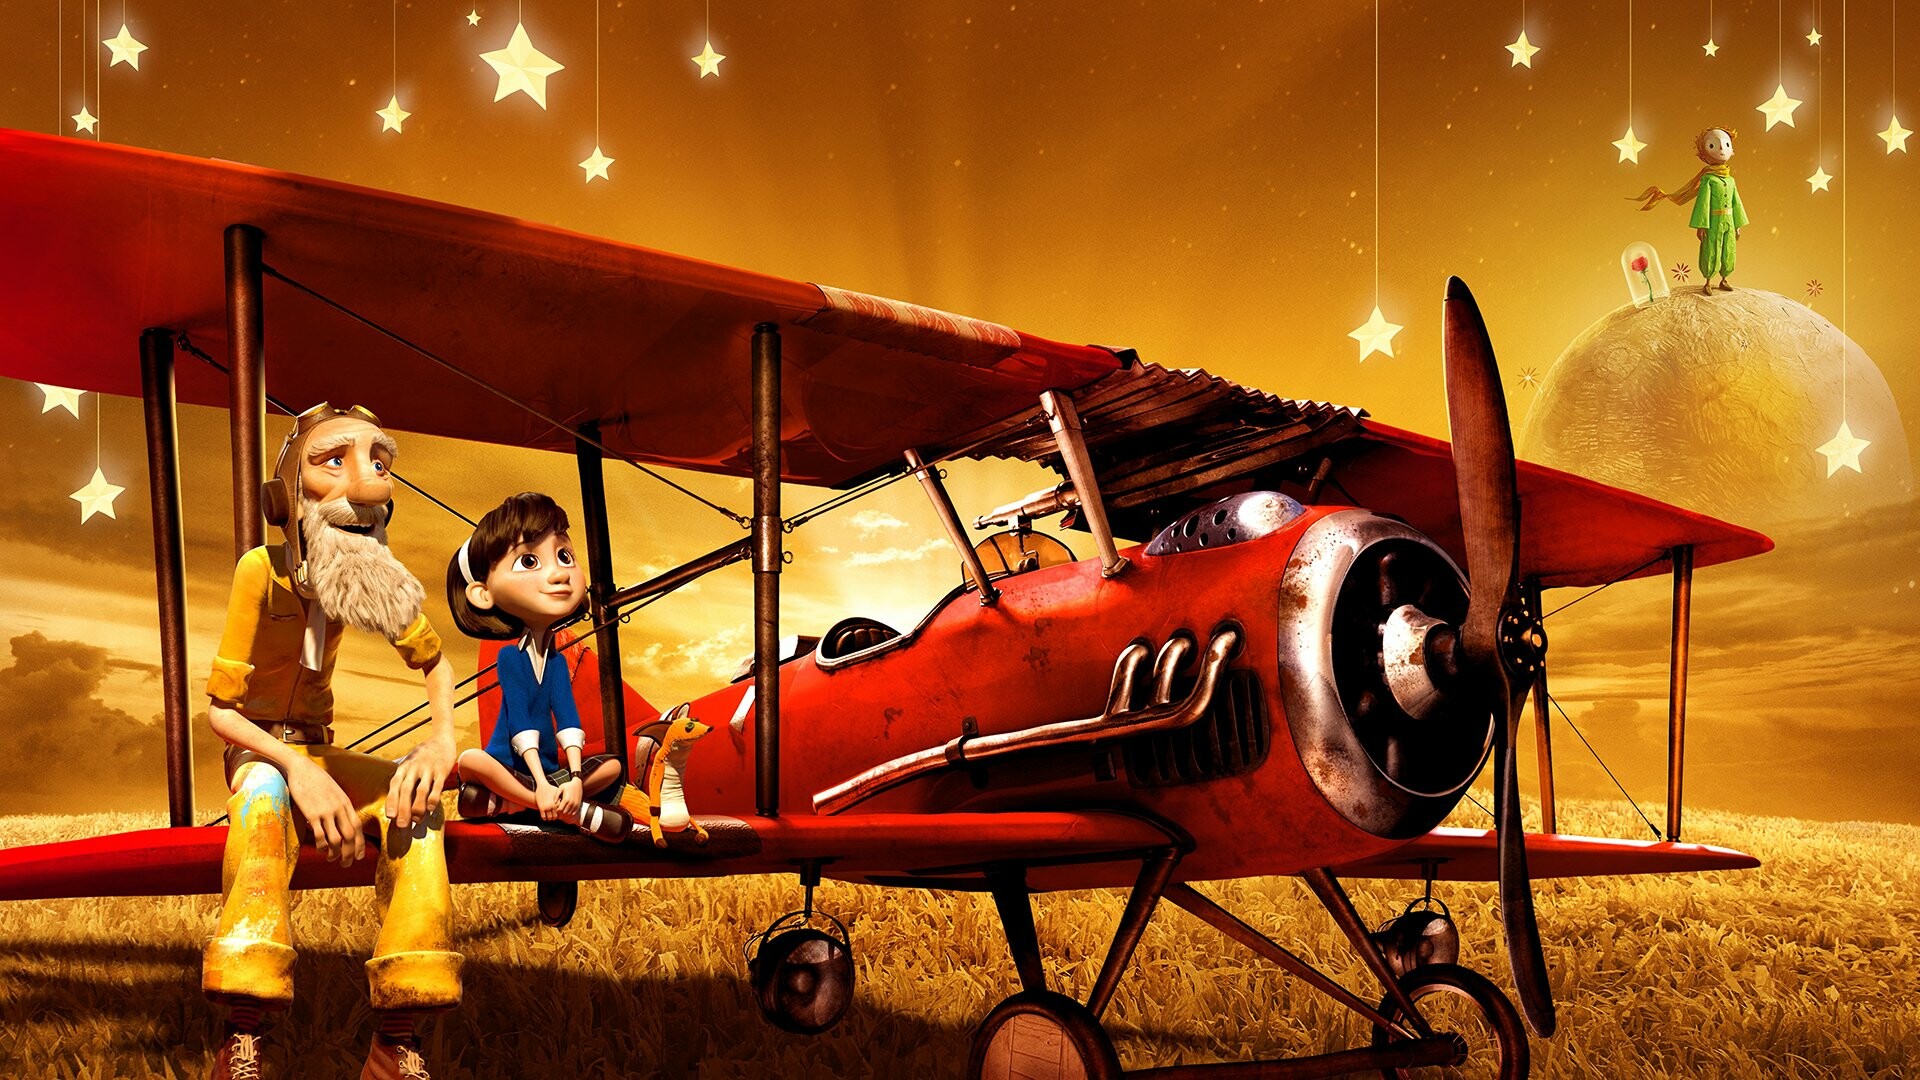 The Little Prince: Jeff Bridges as The Aviator, Mackenzie Foy as The Little Girl. 1920x1080 Full HD Wallpaper.